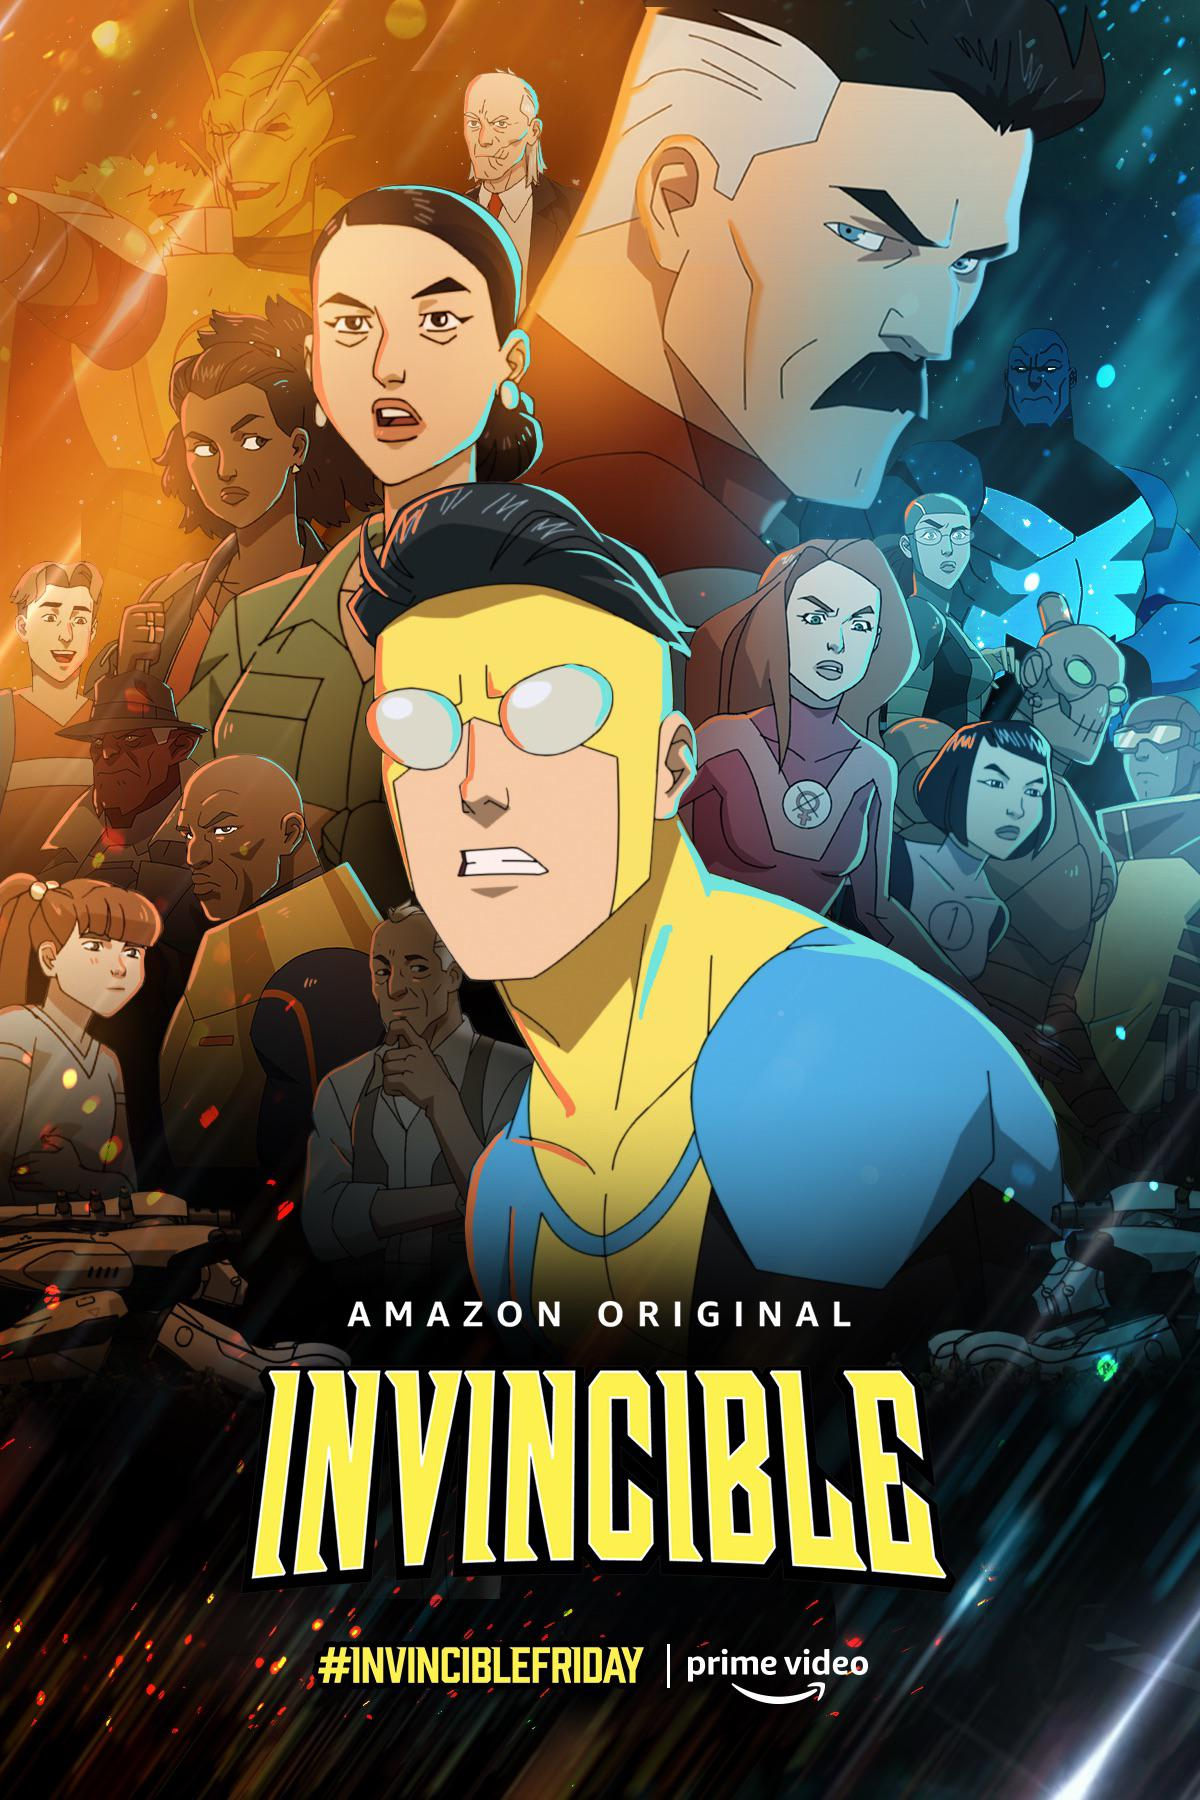 Invincible: Season 1 Review